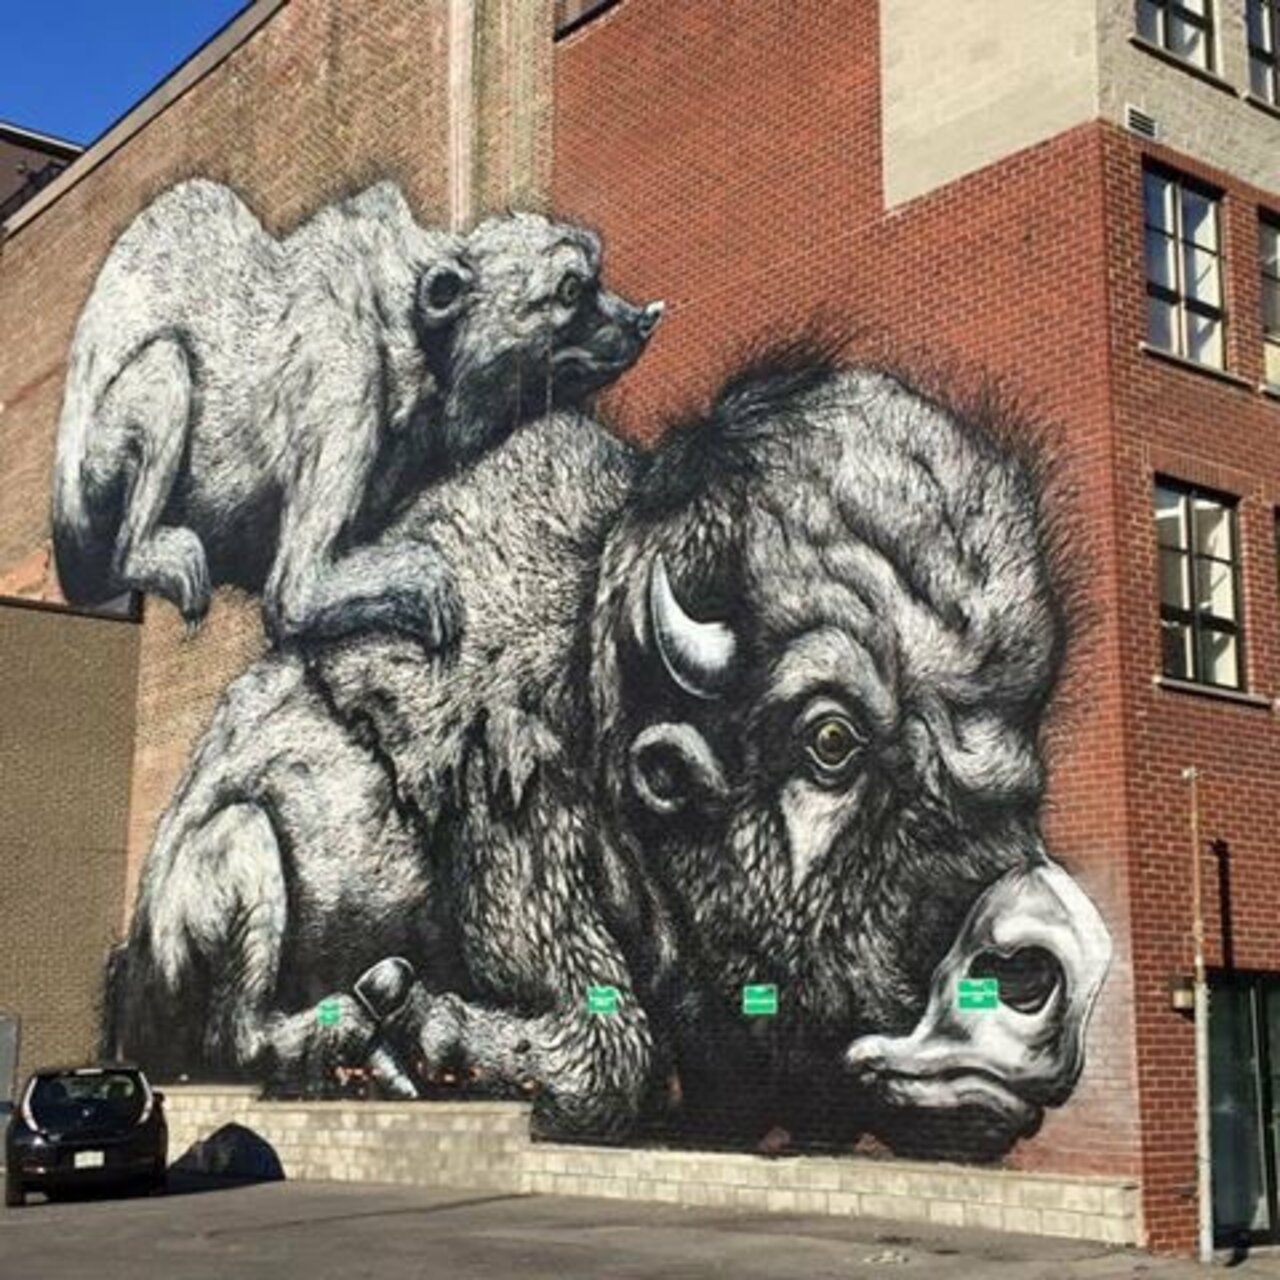 Mural by ROA #Montreal #Canada #Streetart #urbanart #graffiti #mural #art https://t.co/S1DbKRuEQS